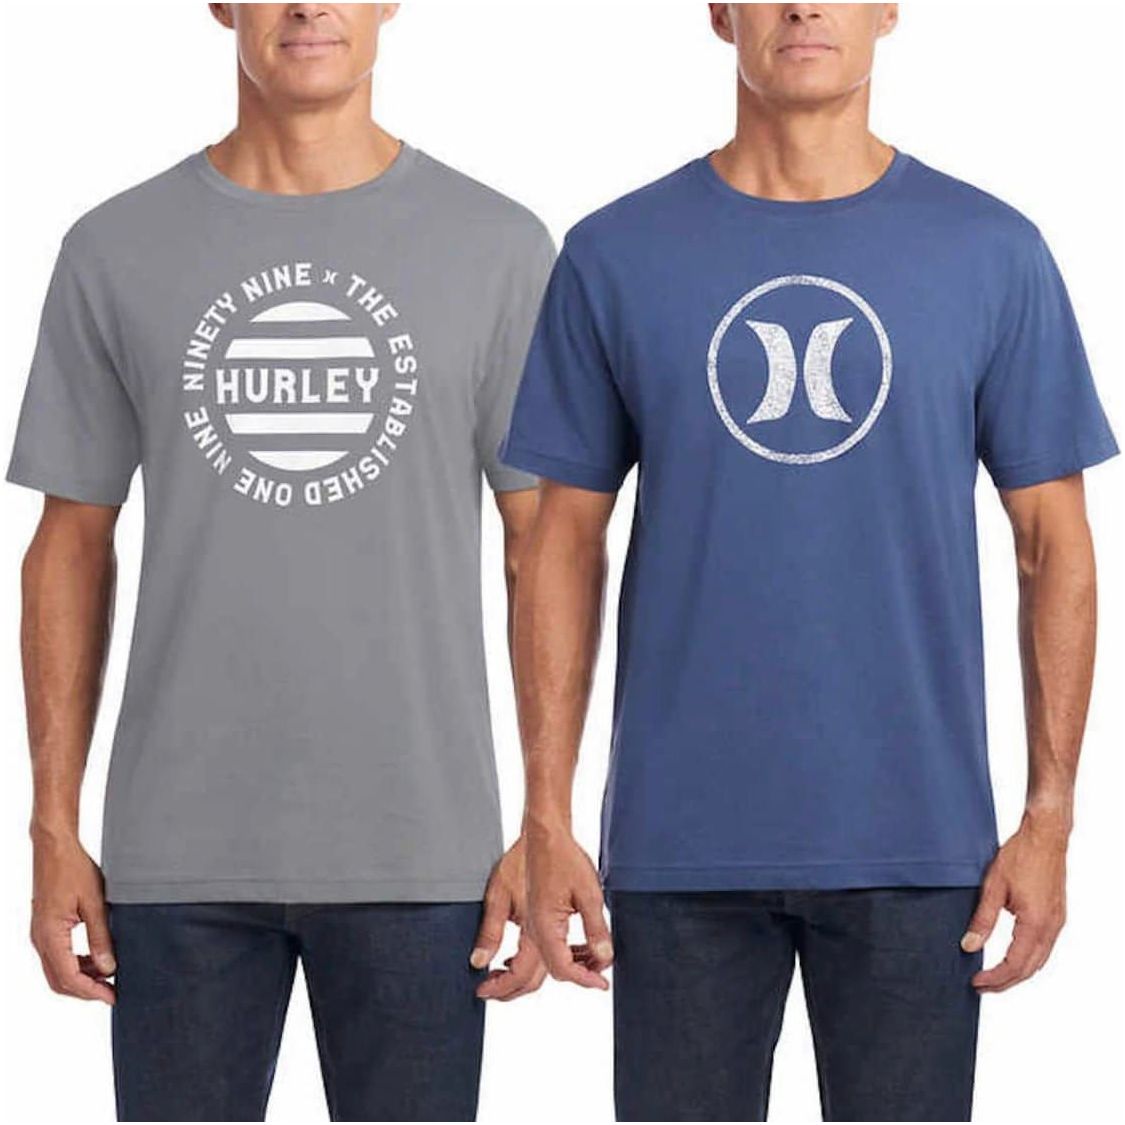 Hurley Men's 2 Pack Classic Graphic Tees, Blue/Dark Grey